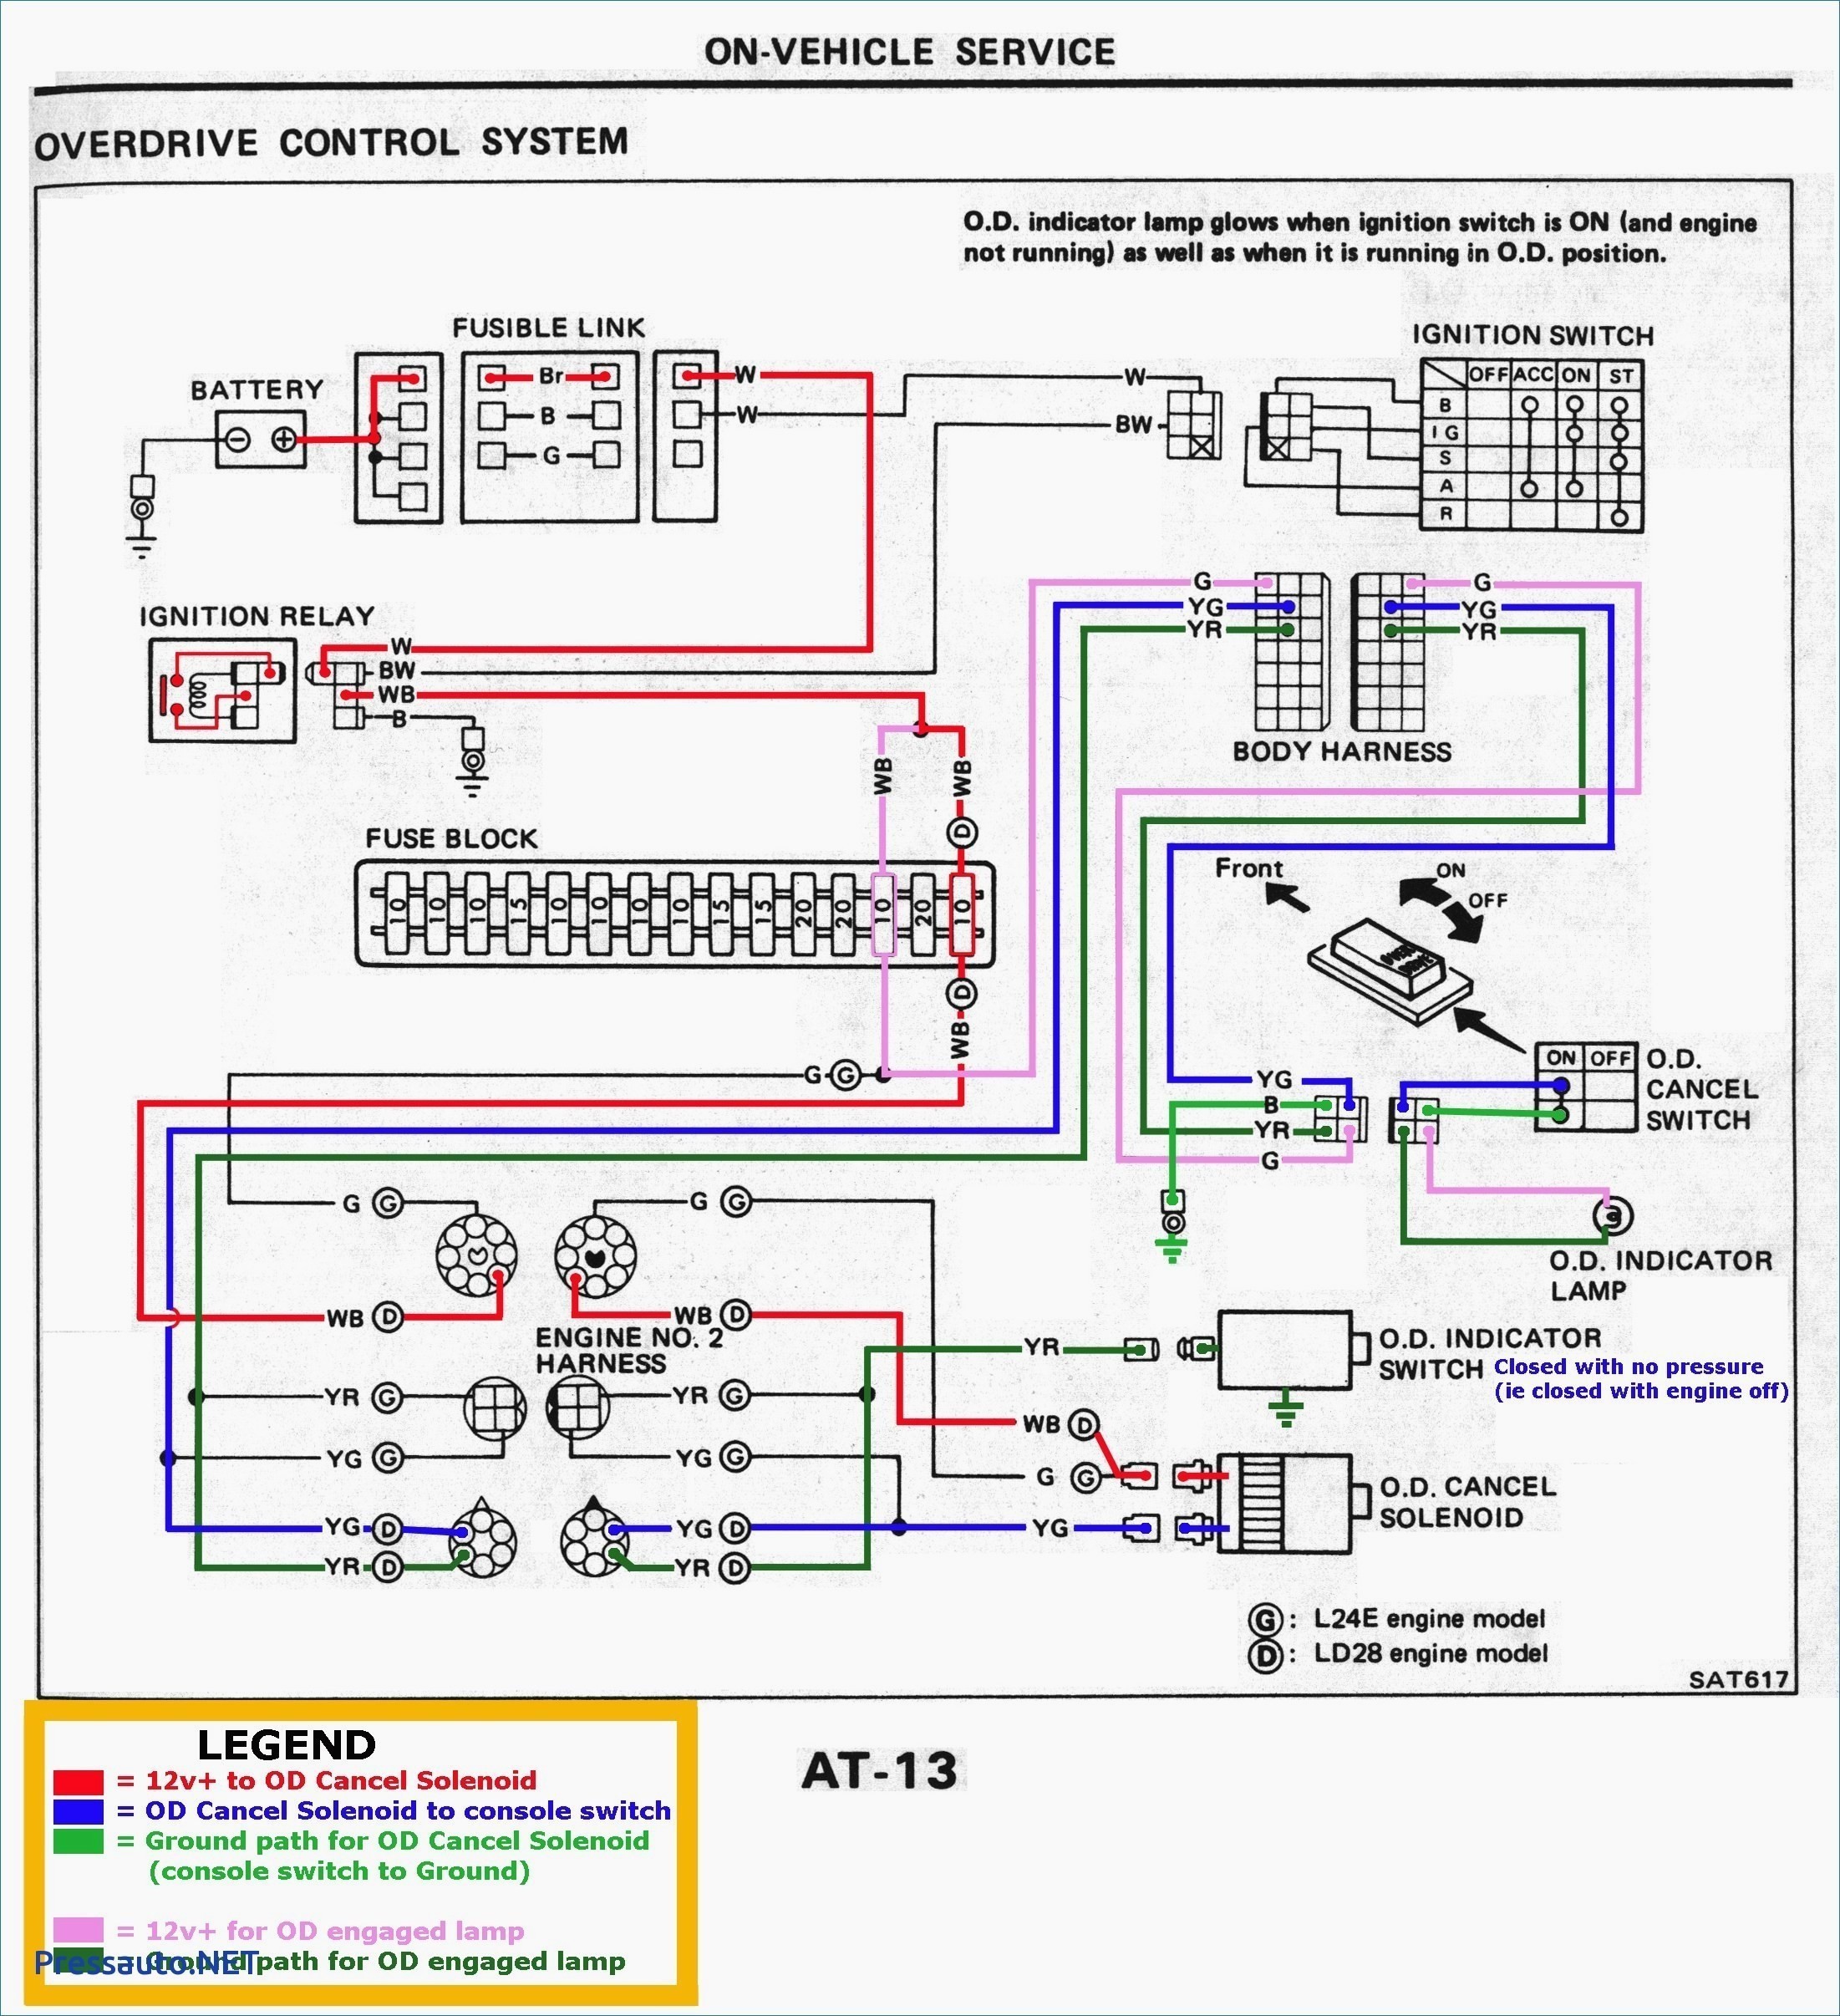 Power Window Wiring Diagram Universal Power Window Wiring Diagram Fresh Ignition Switch Wiring Of Power Window Wiring Diagram